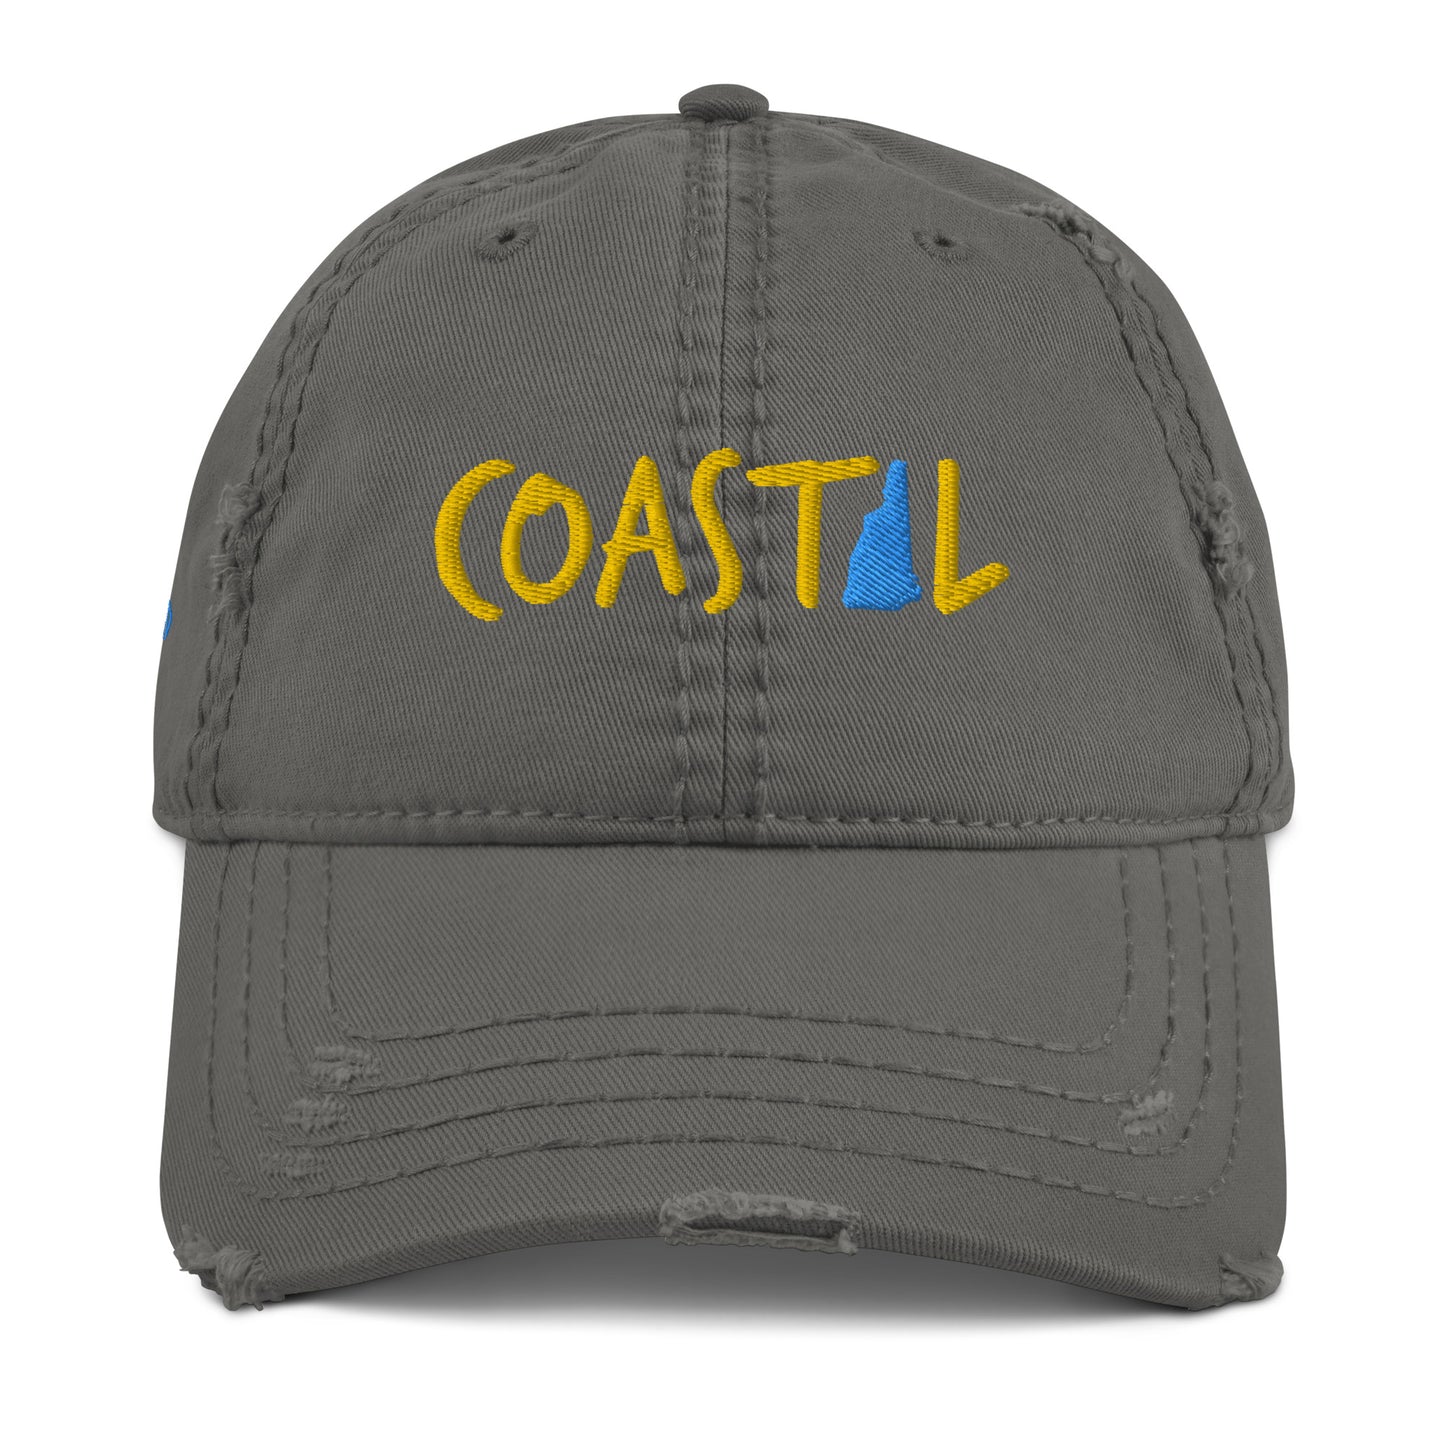 Coastal New Hampshire™ Distressed Dad Hat